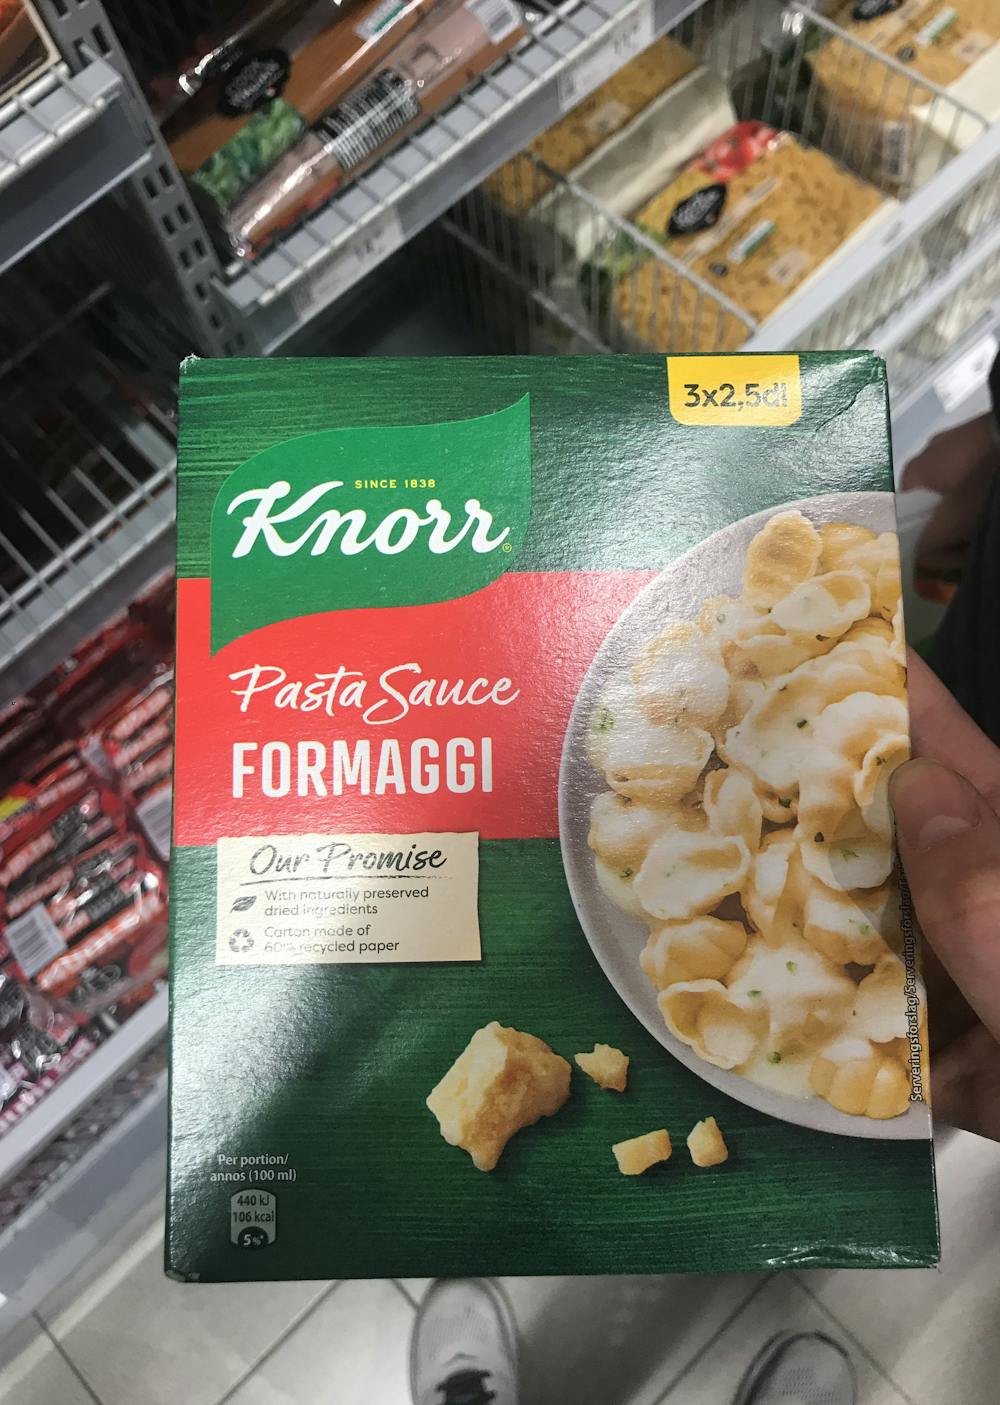 Pasta sauce formaggi, Knorr